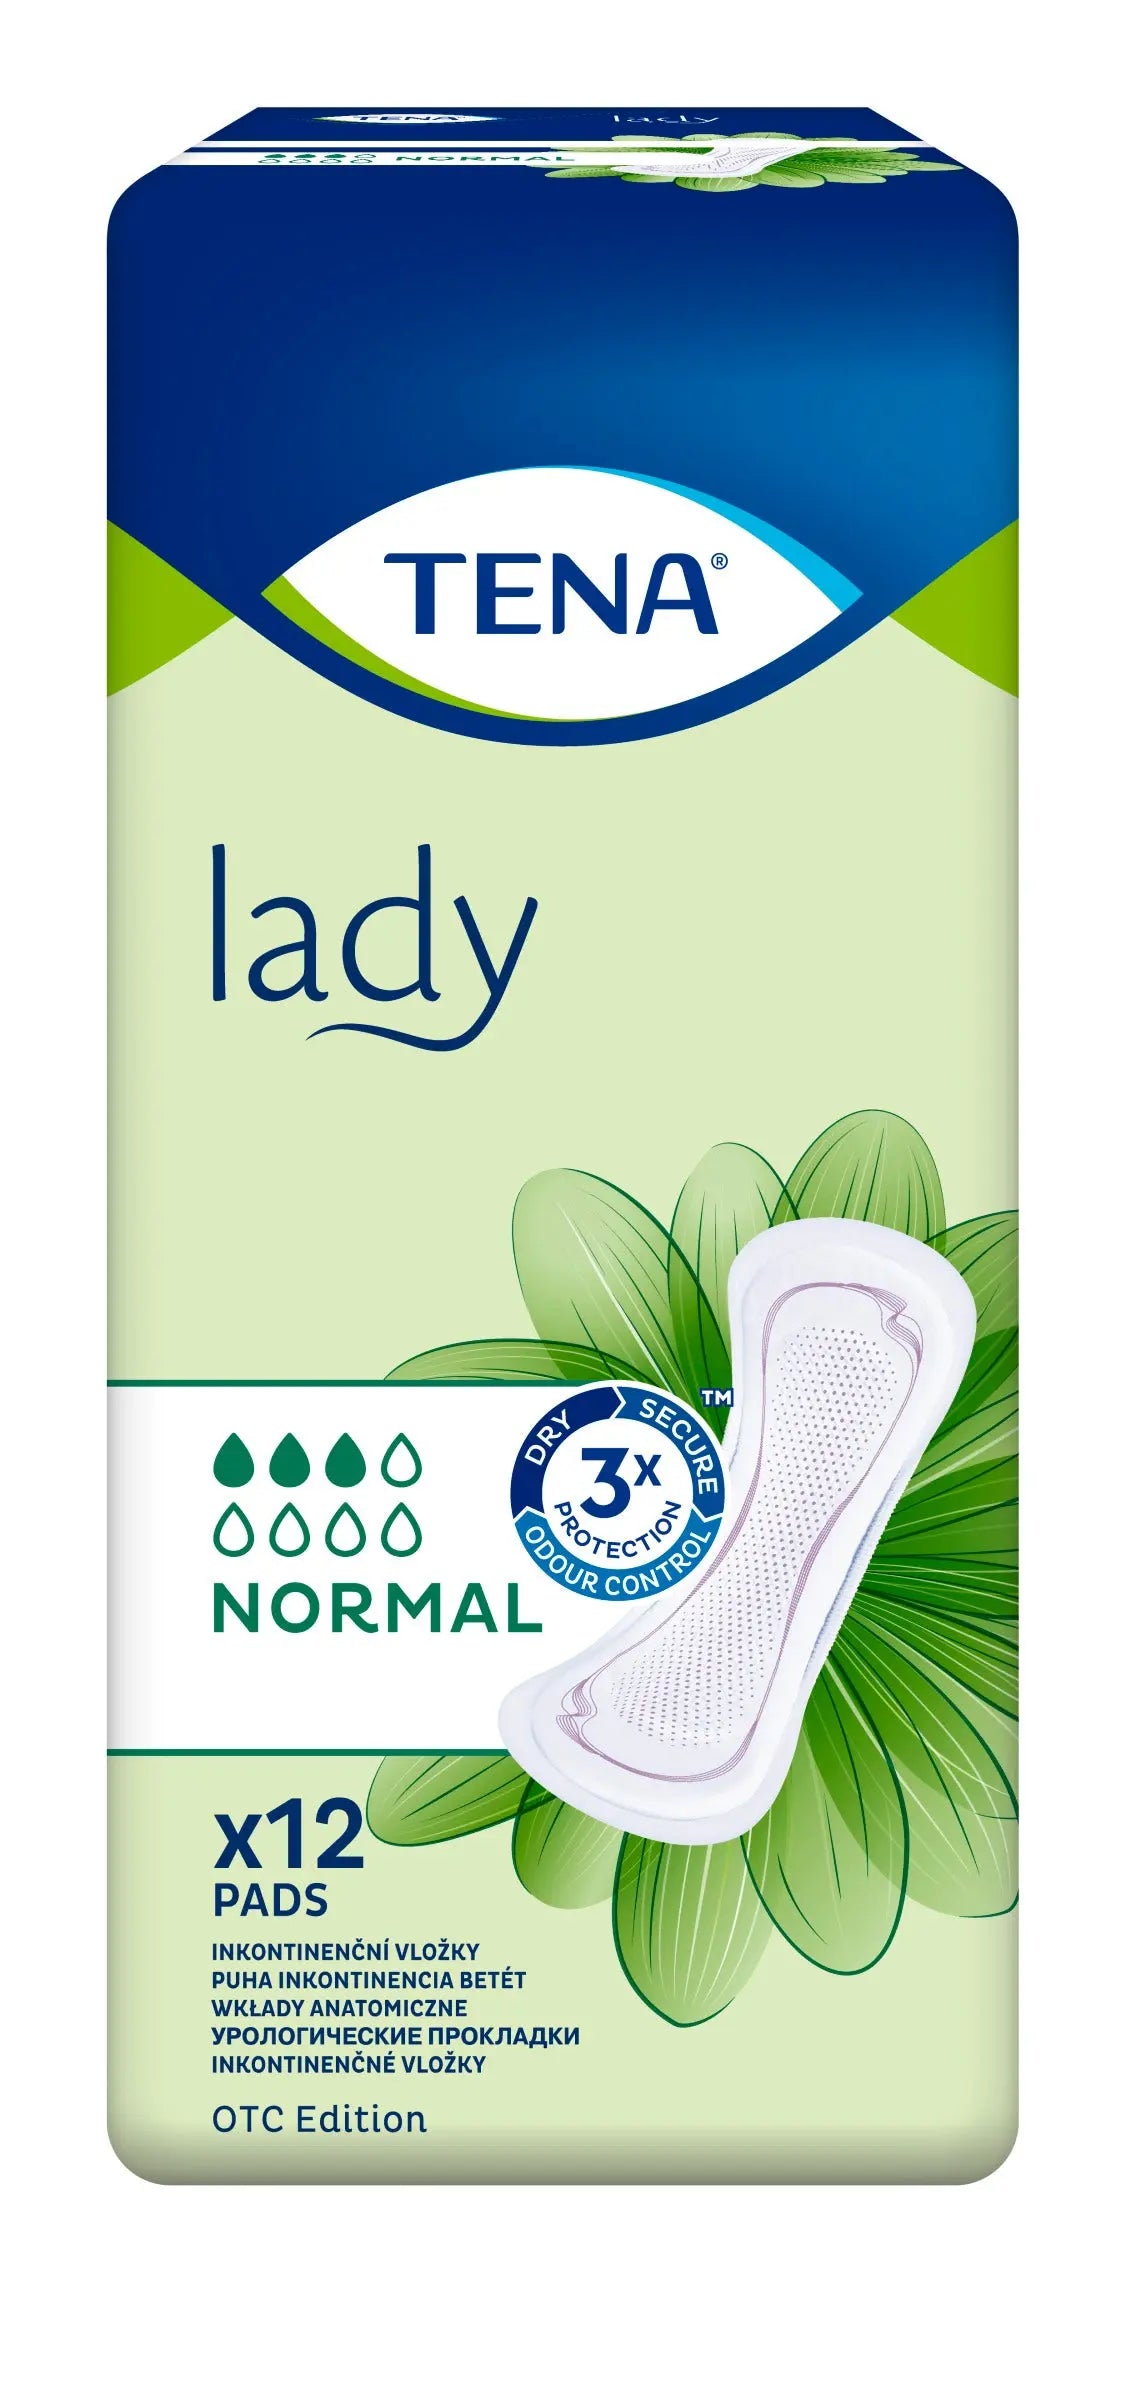 Tena Lady Normal 12 Pads Odor Control 3X protection TENA